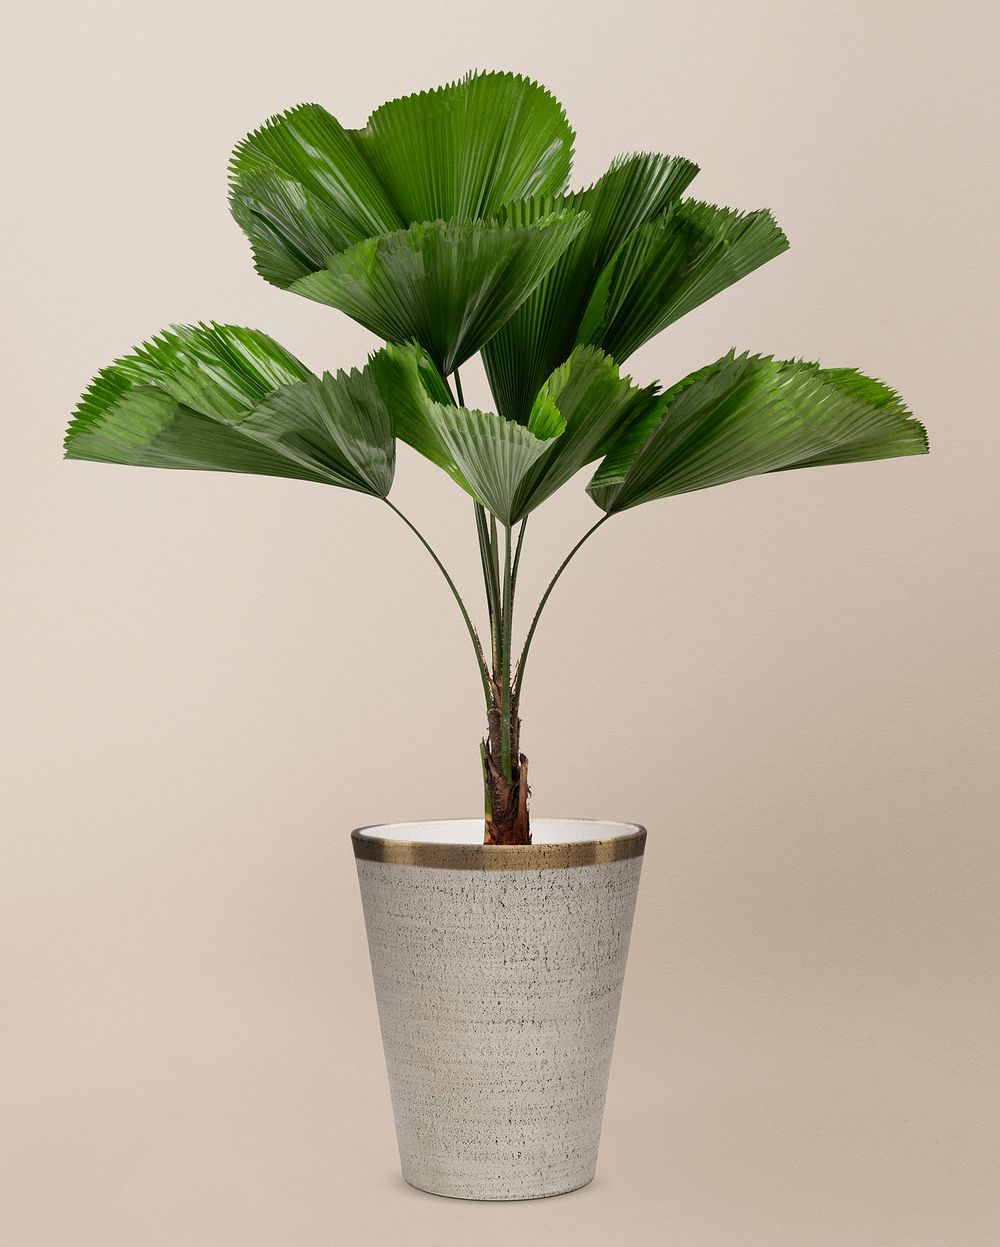 Ruffled leaf palm in a gray pot